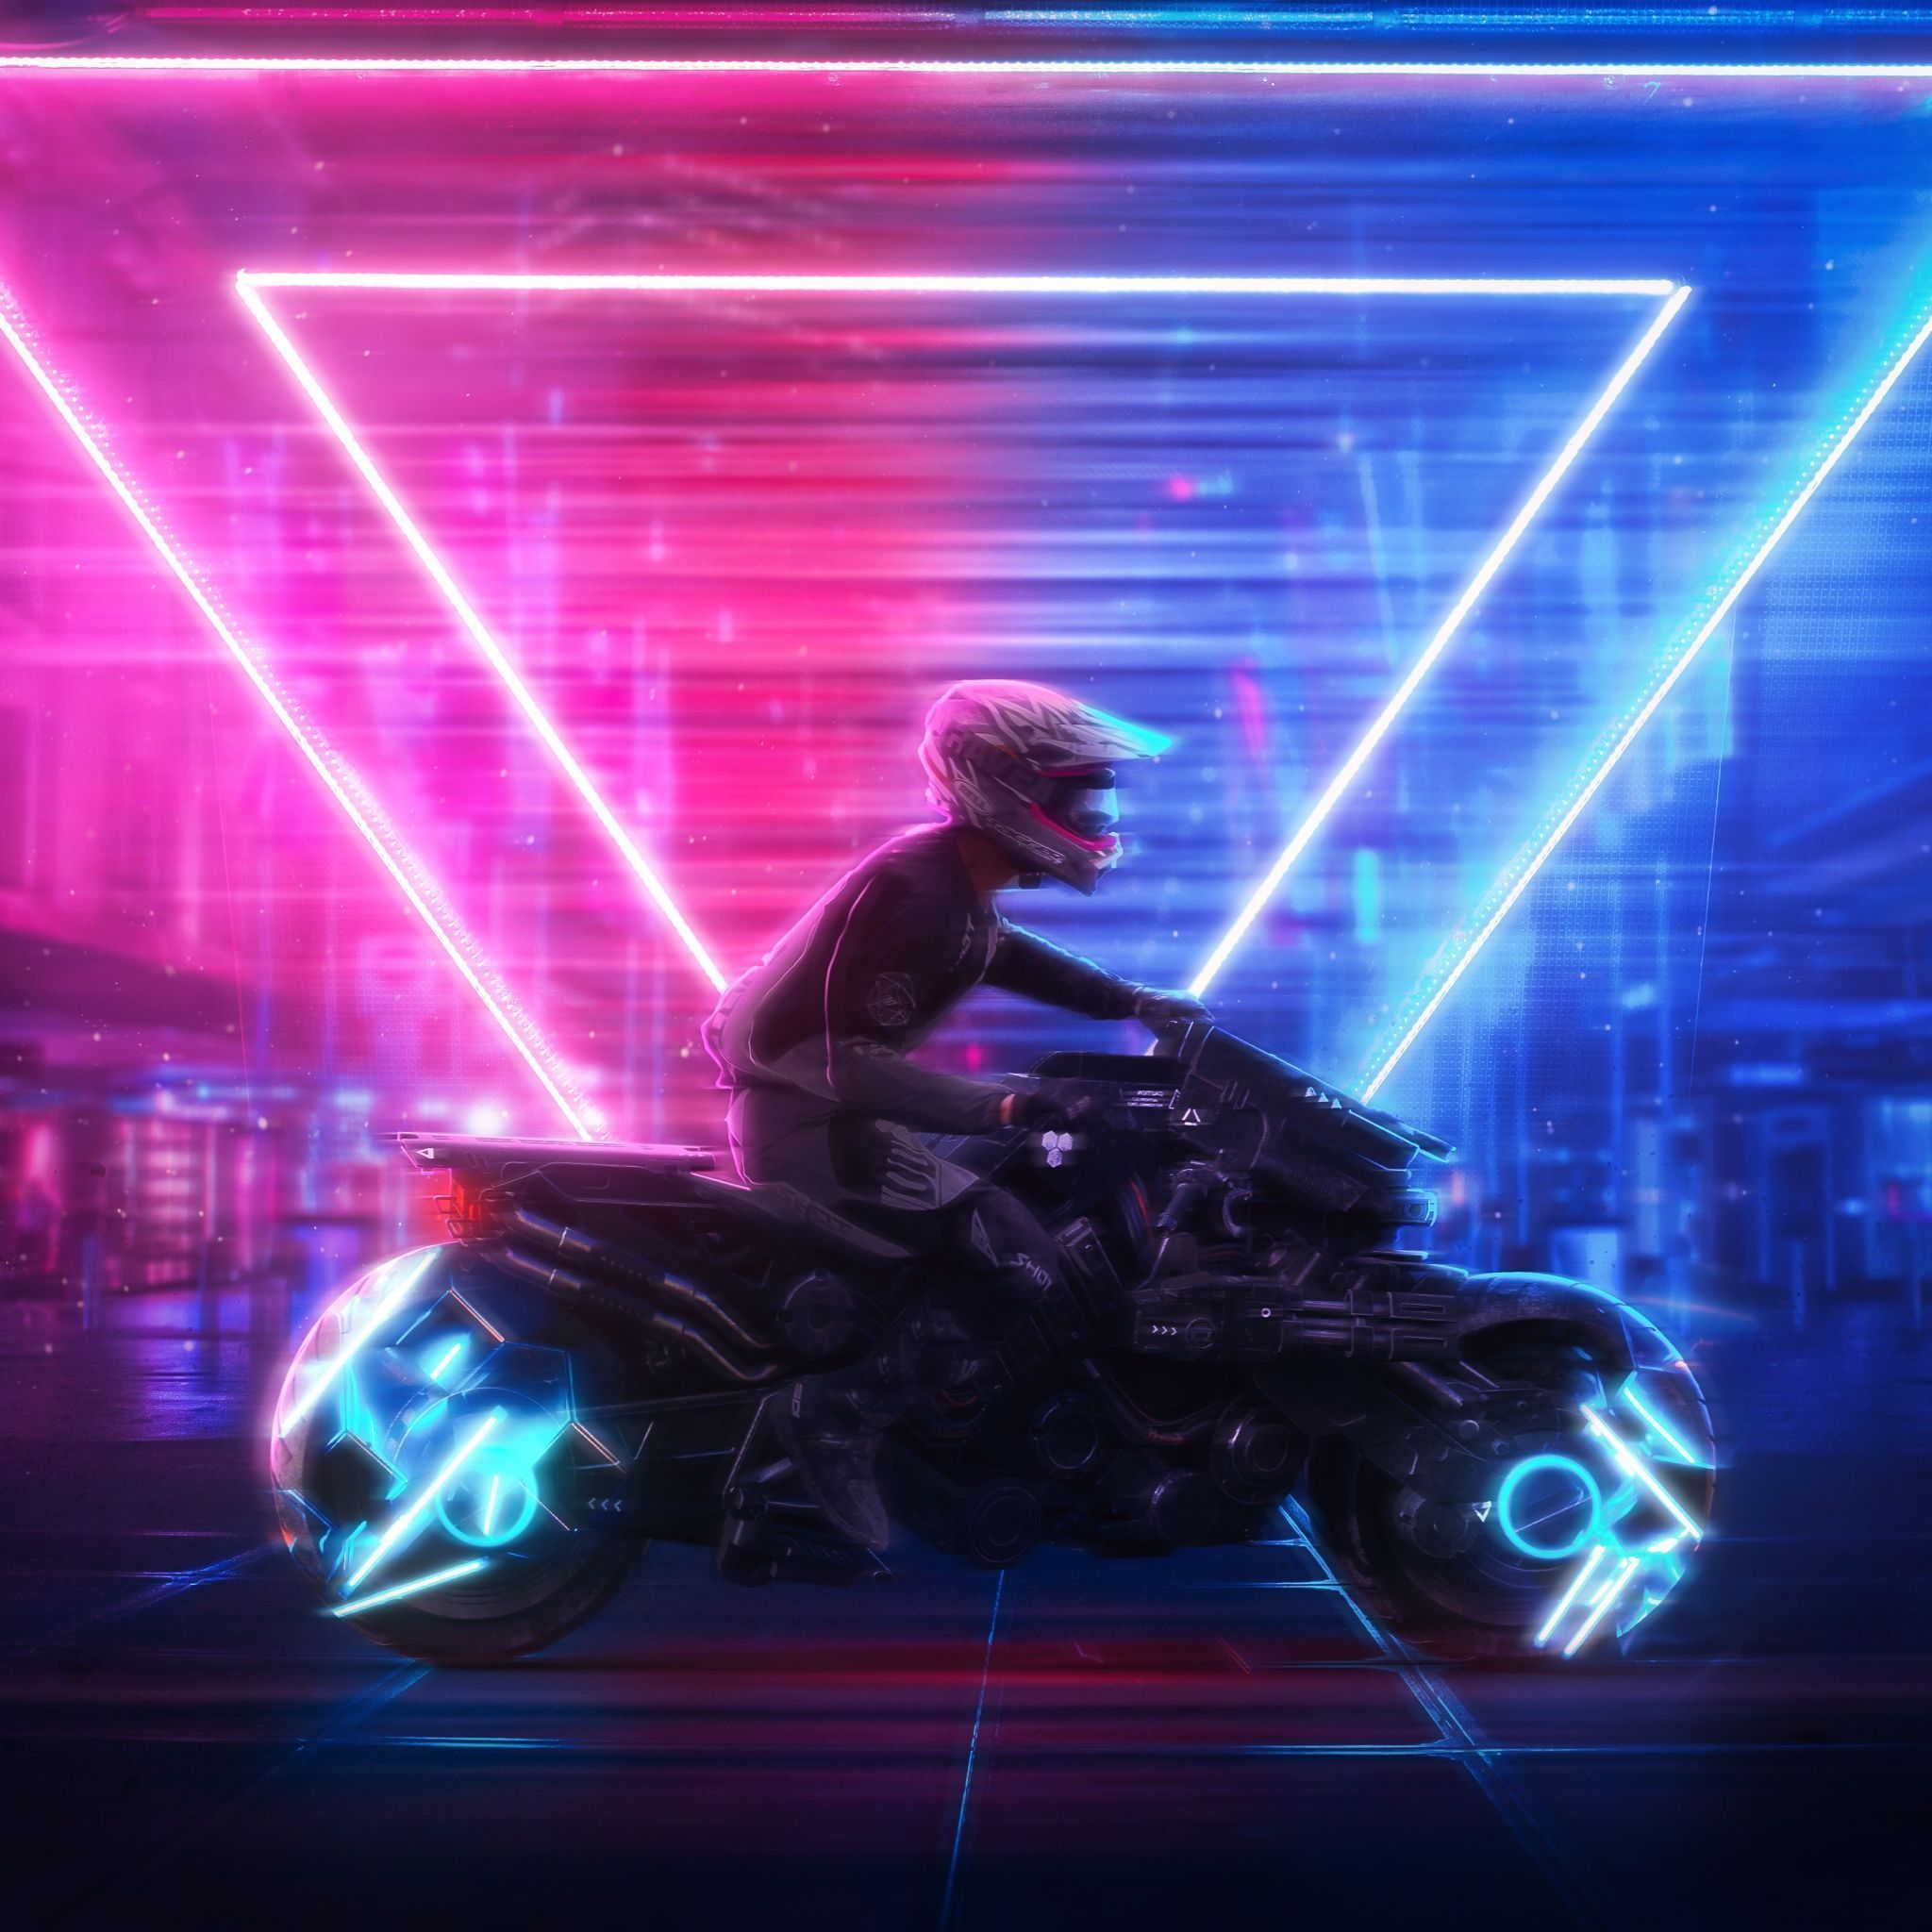 A Cyberpunk wallpaper of a girl riding a motorcycle with neon lights. - Cyberpunk 2077